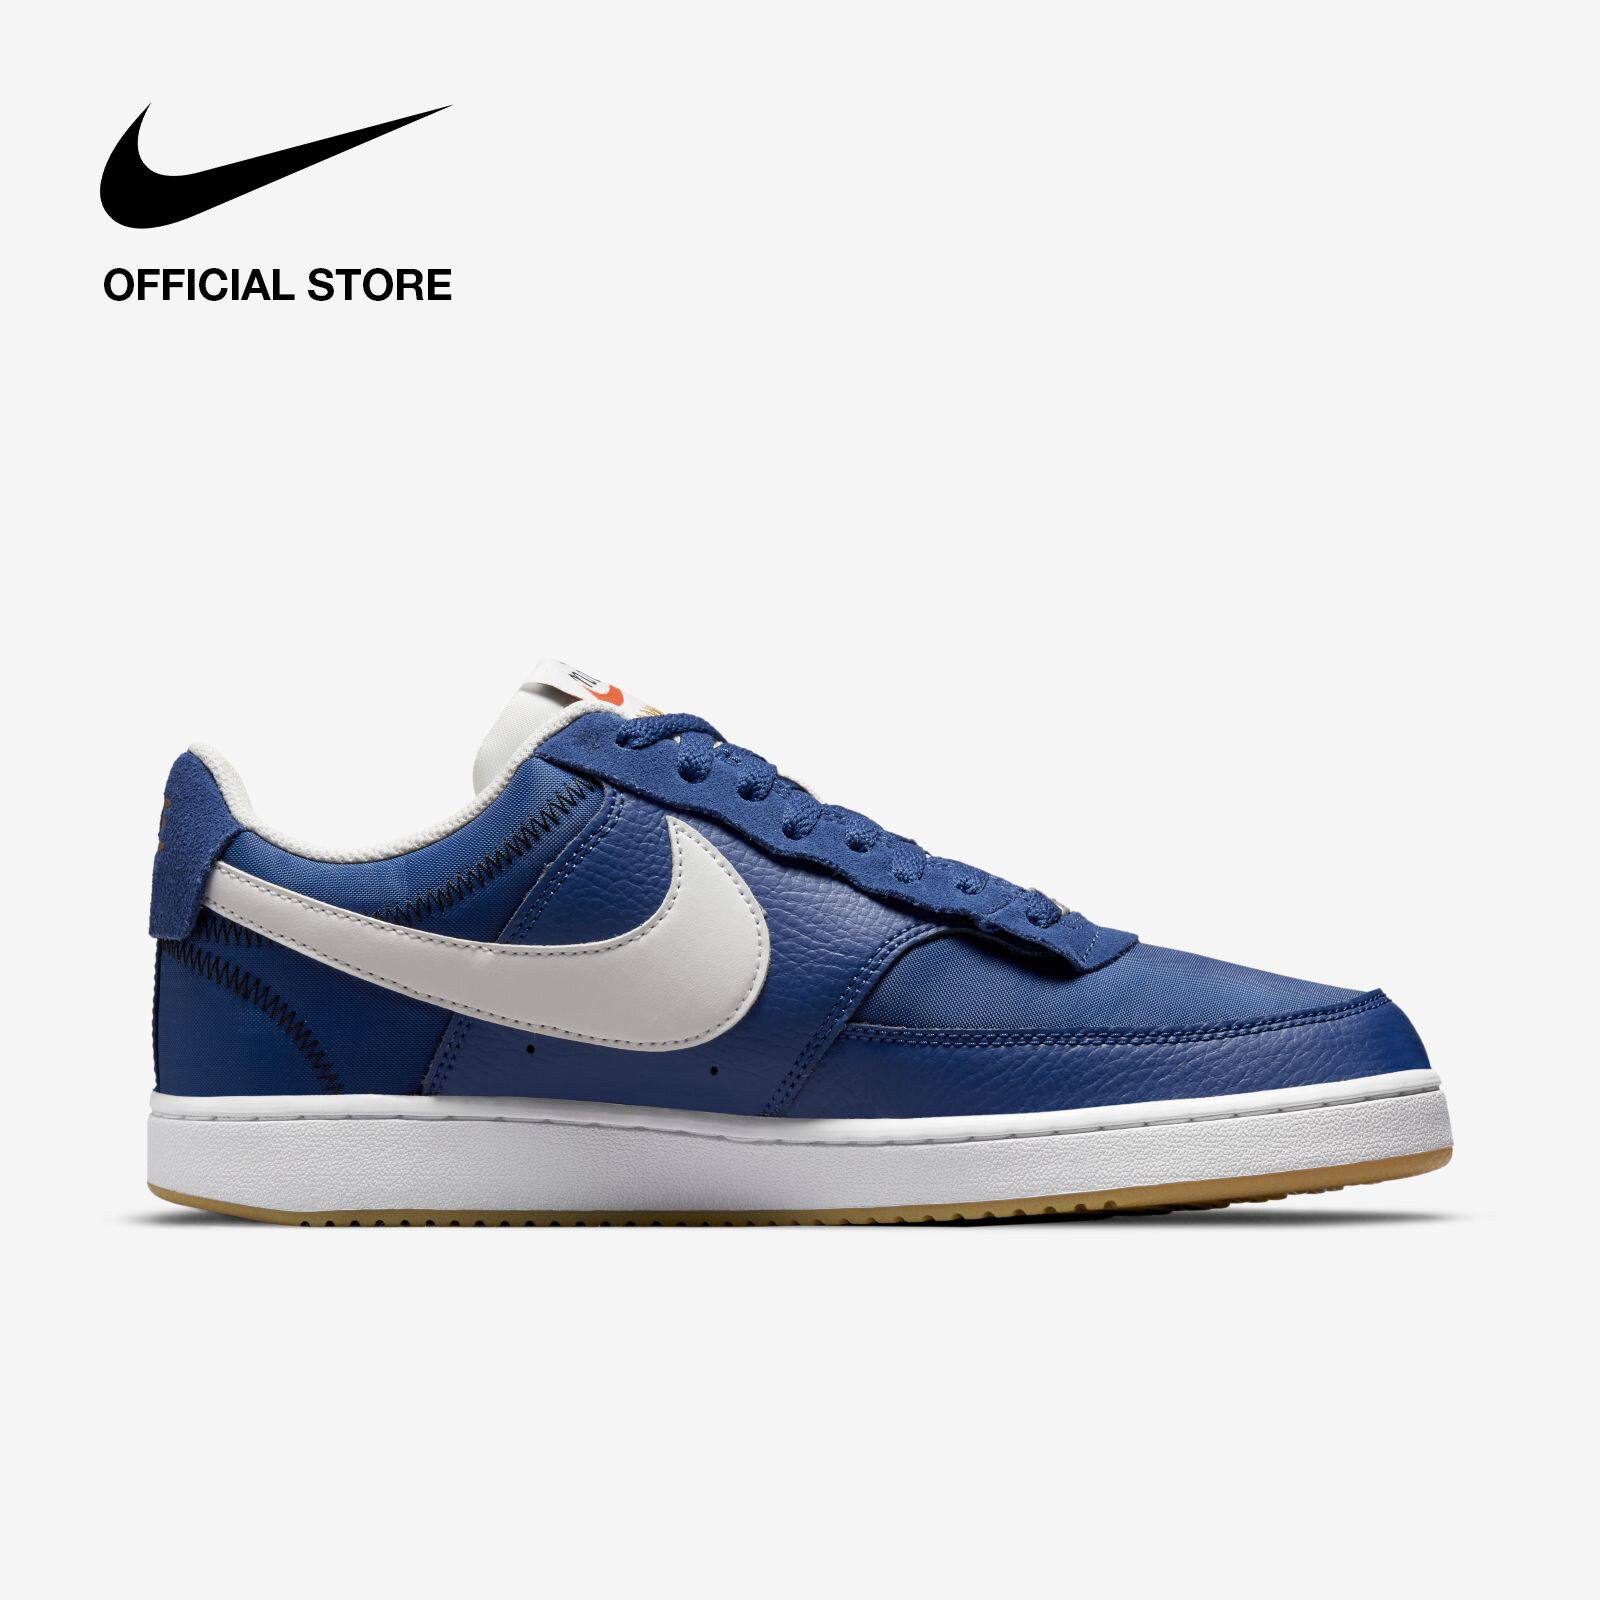 Nike Men's Court Vision Low Premium Shoes - Deep Royal Blue ไนกี้ รองเท้าผู้ชาย คอร์ท วิชั่น โลว์ พรีเมียม - สีฟ้า